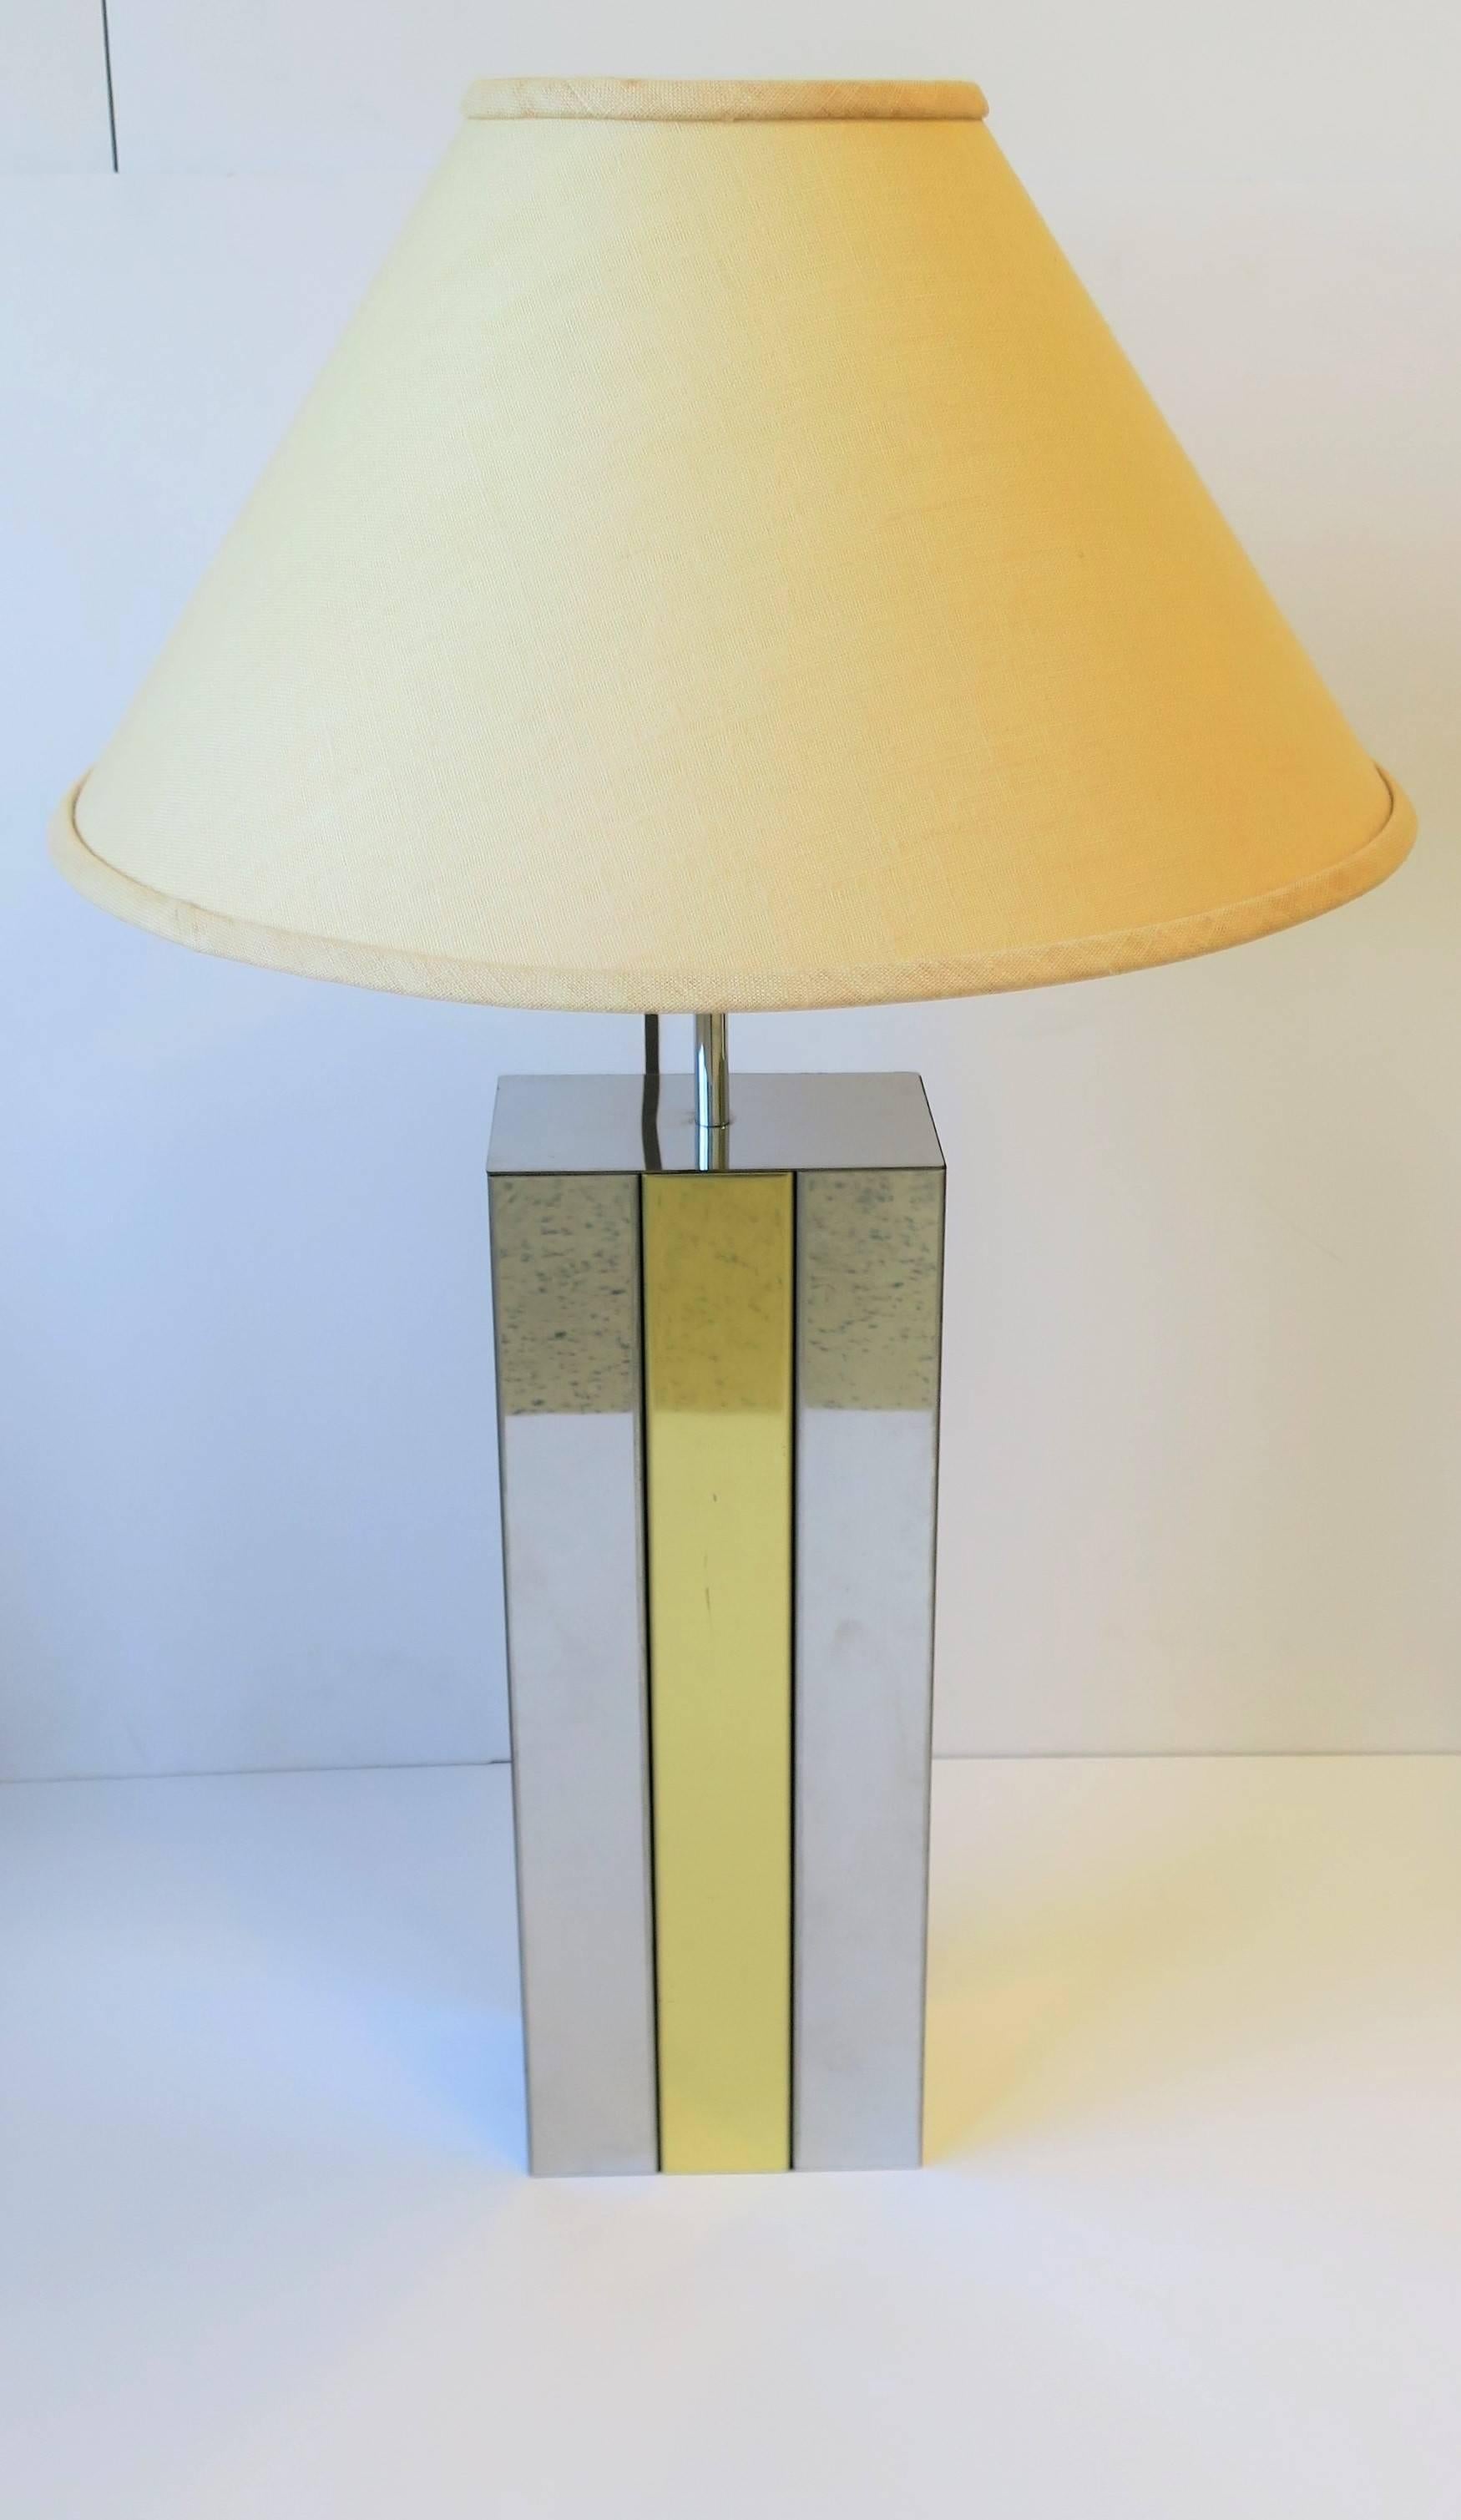 Modern Robert Sonneman Chrome and Brass Table Lamp, circa 1970s For Sale 1